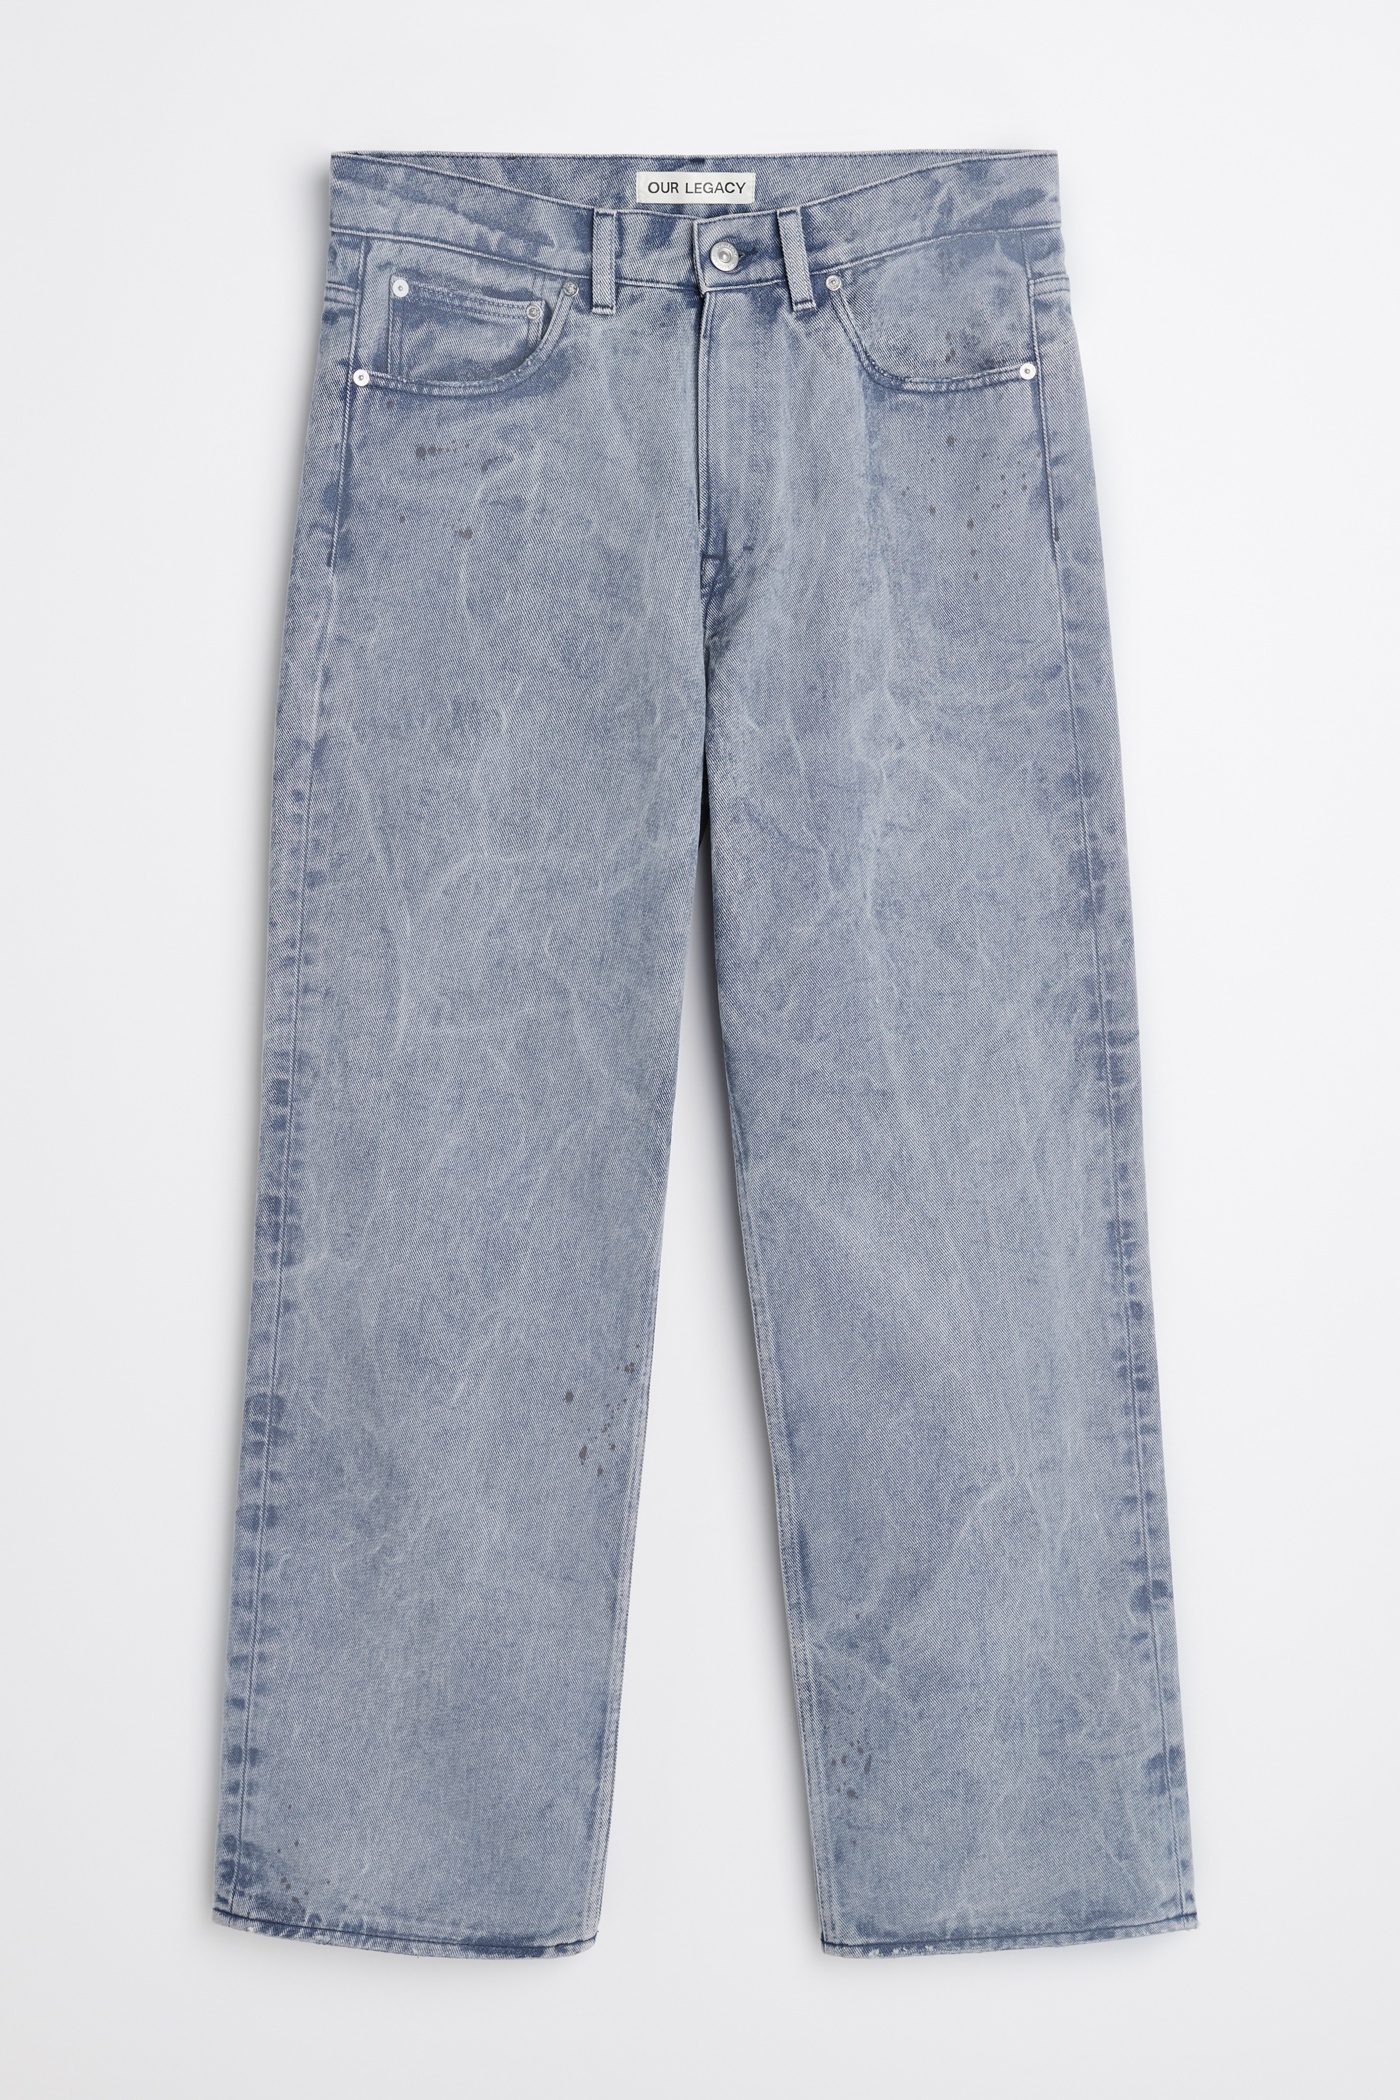 Third Cut Jeans Twilight Attic Wash - 1